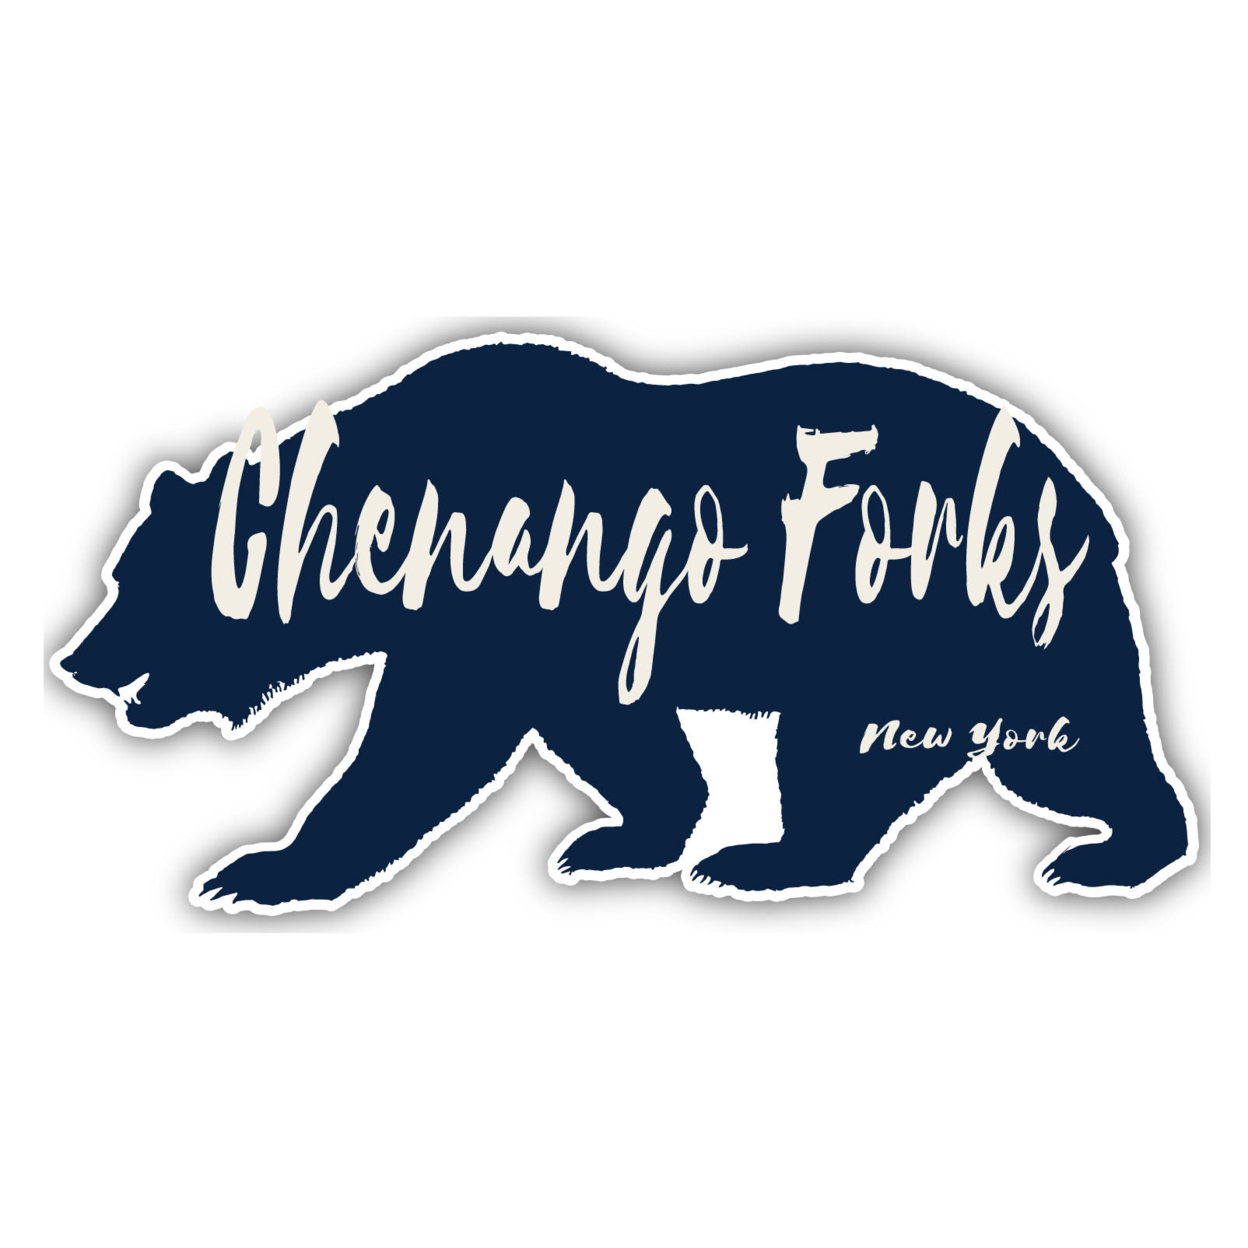 Chenango Forks New York Souvenir Decorative Stickers (Choose Theme And Size) - Single Unit, 10-Inch, Bear